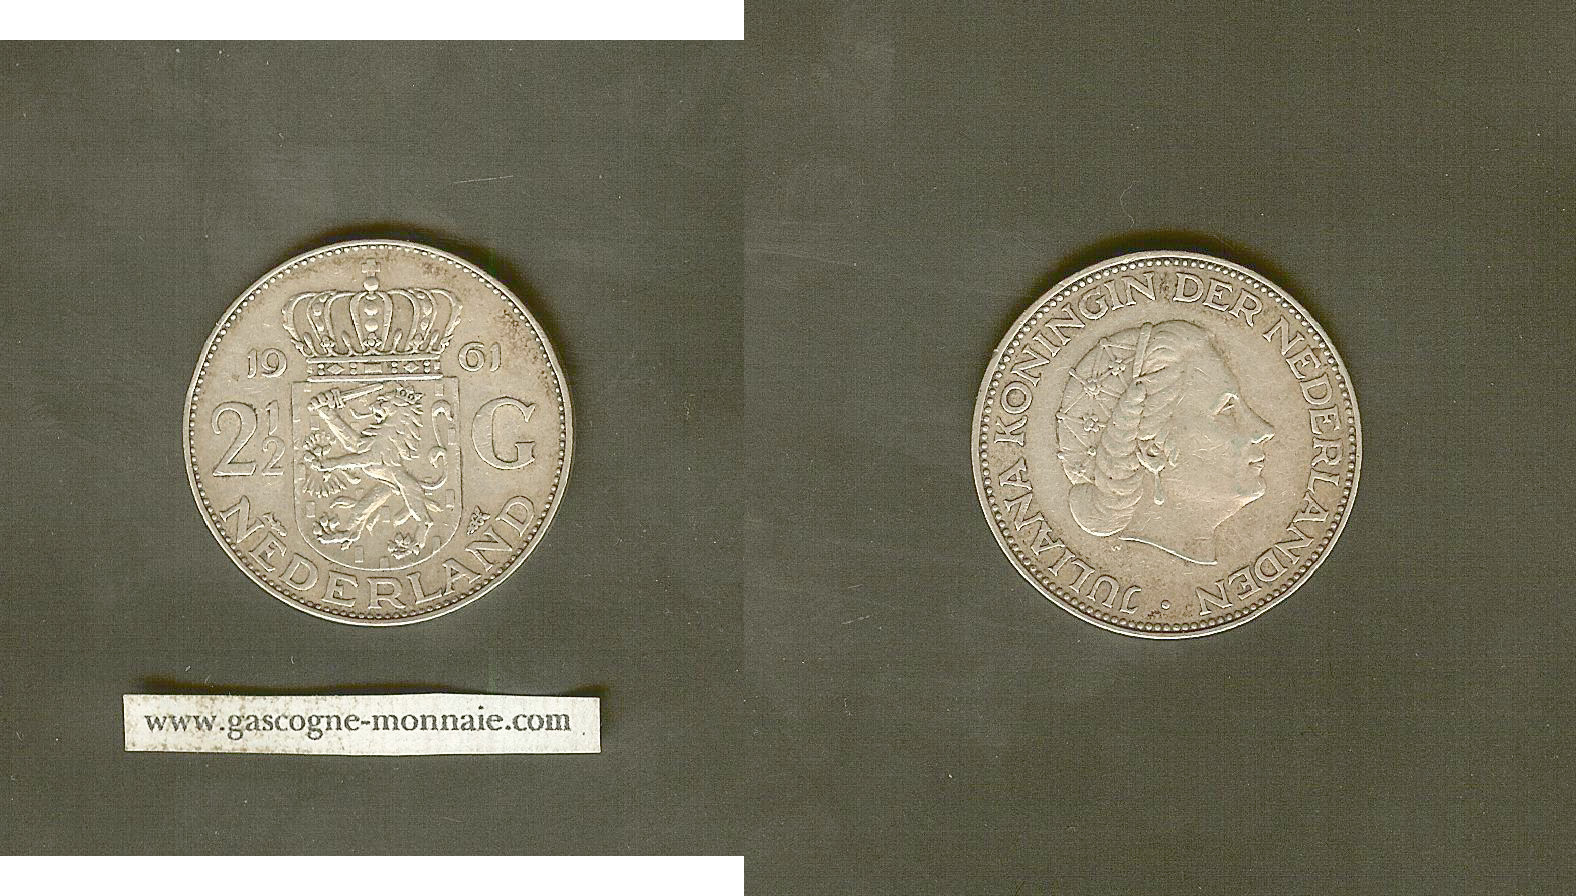 Netherlands 2 1/2 gulden 1961 VF+